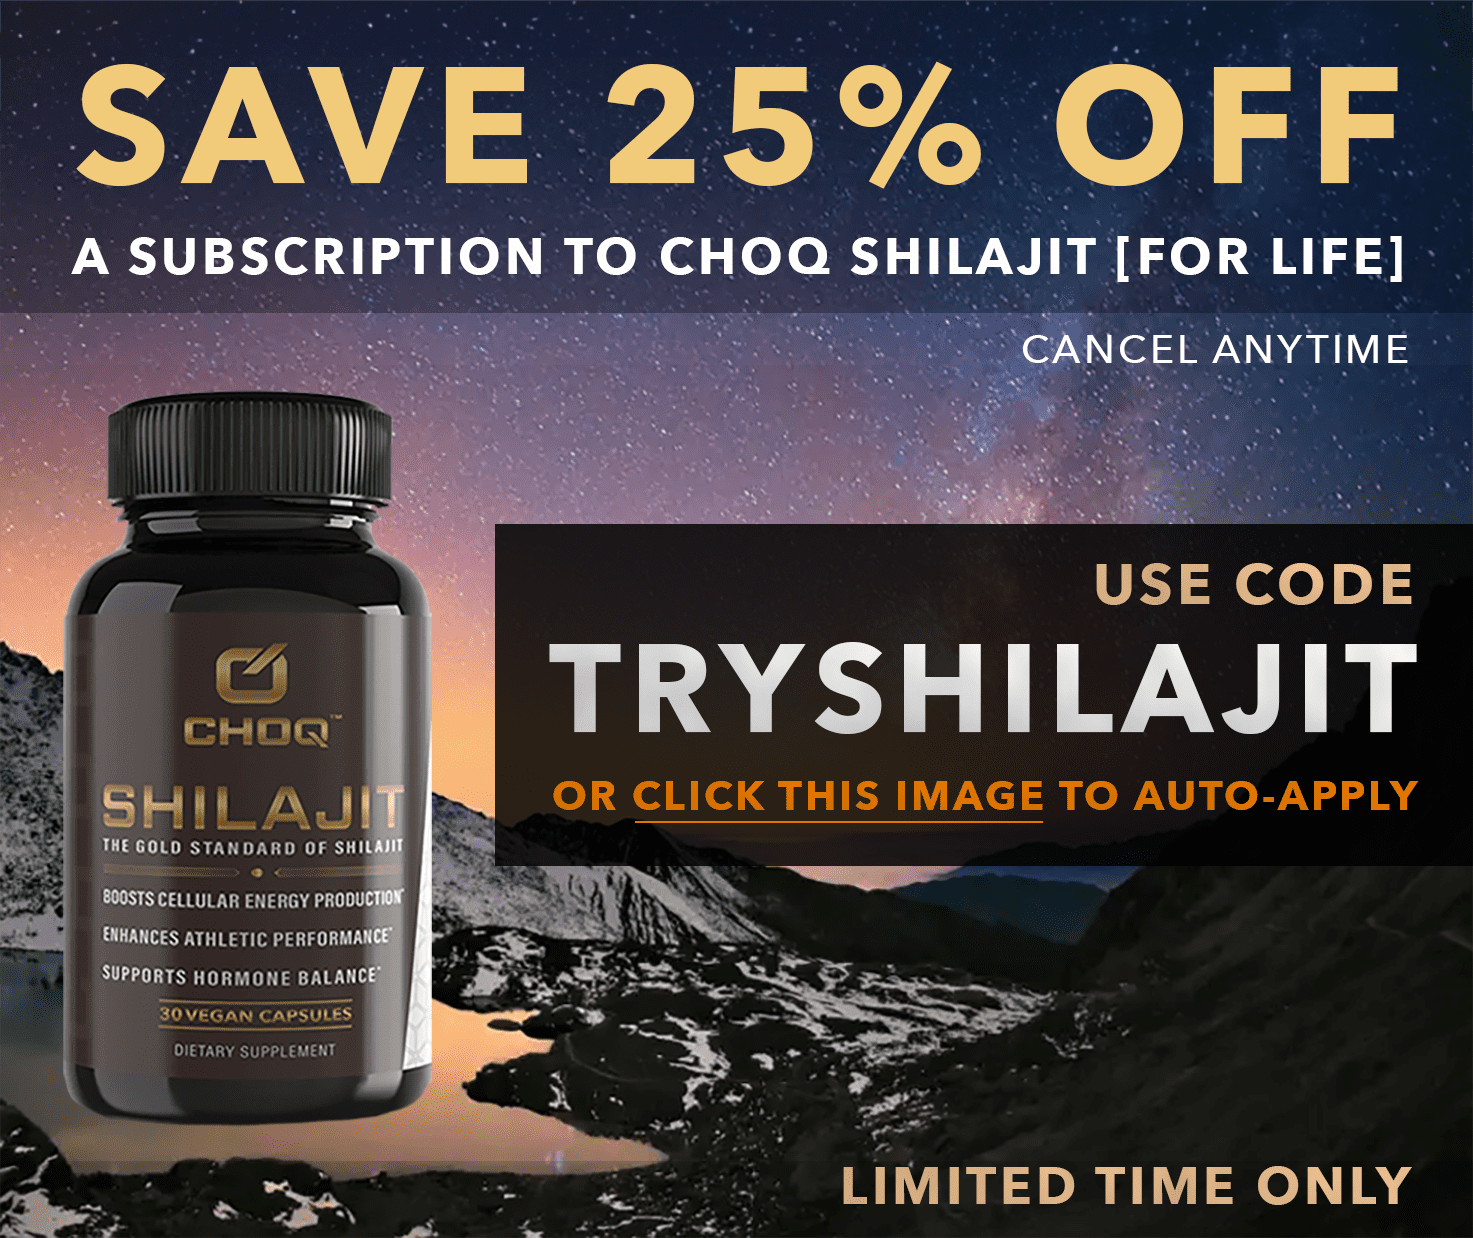 CHOQ Shilajit Subscription 25% off with code tryshilajit